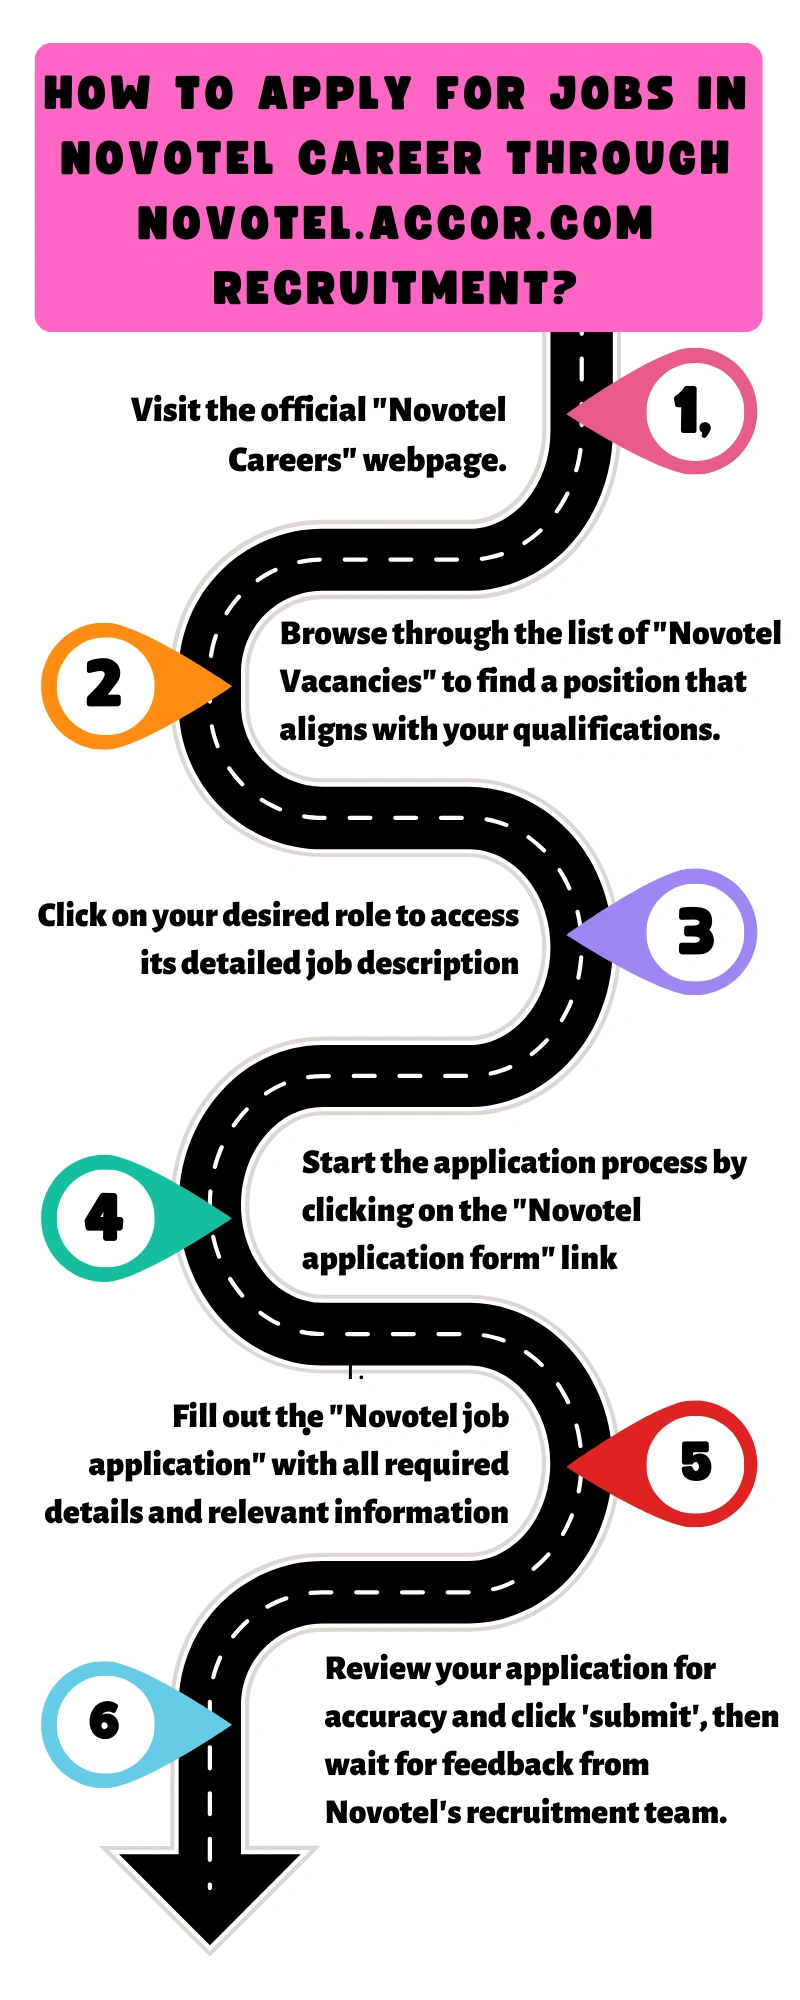 How to Apply for Jobs in Novotel Career through novotel.accor.com recruitment?